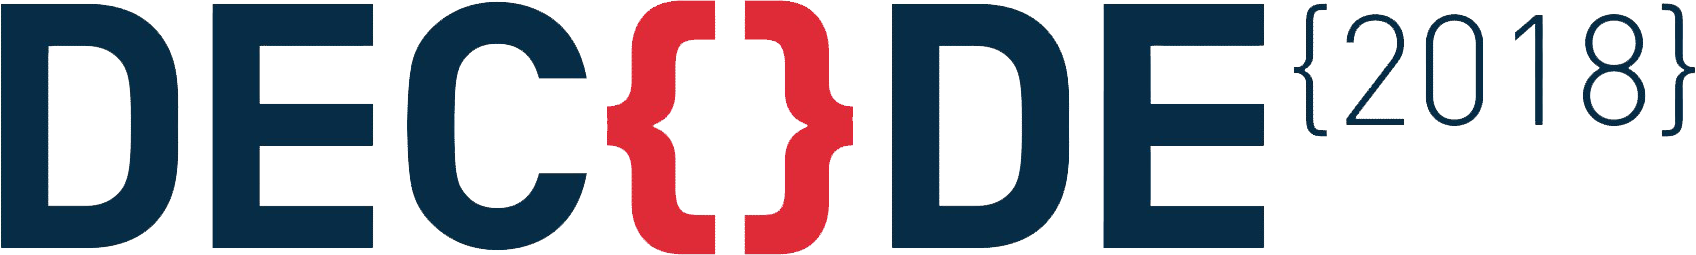 DecodePH 2018 Logo